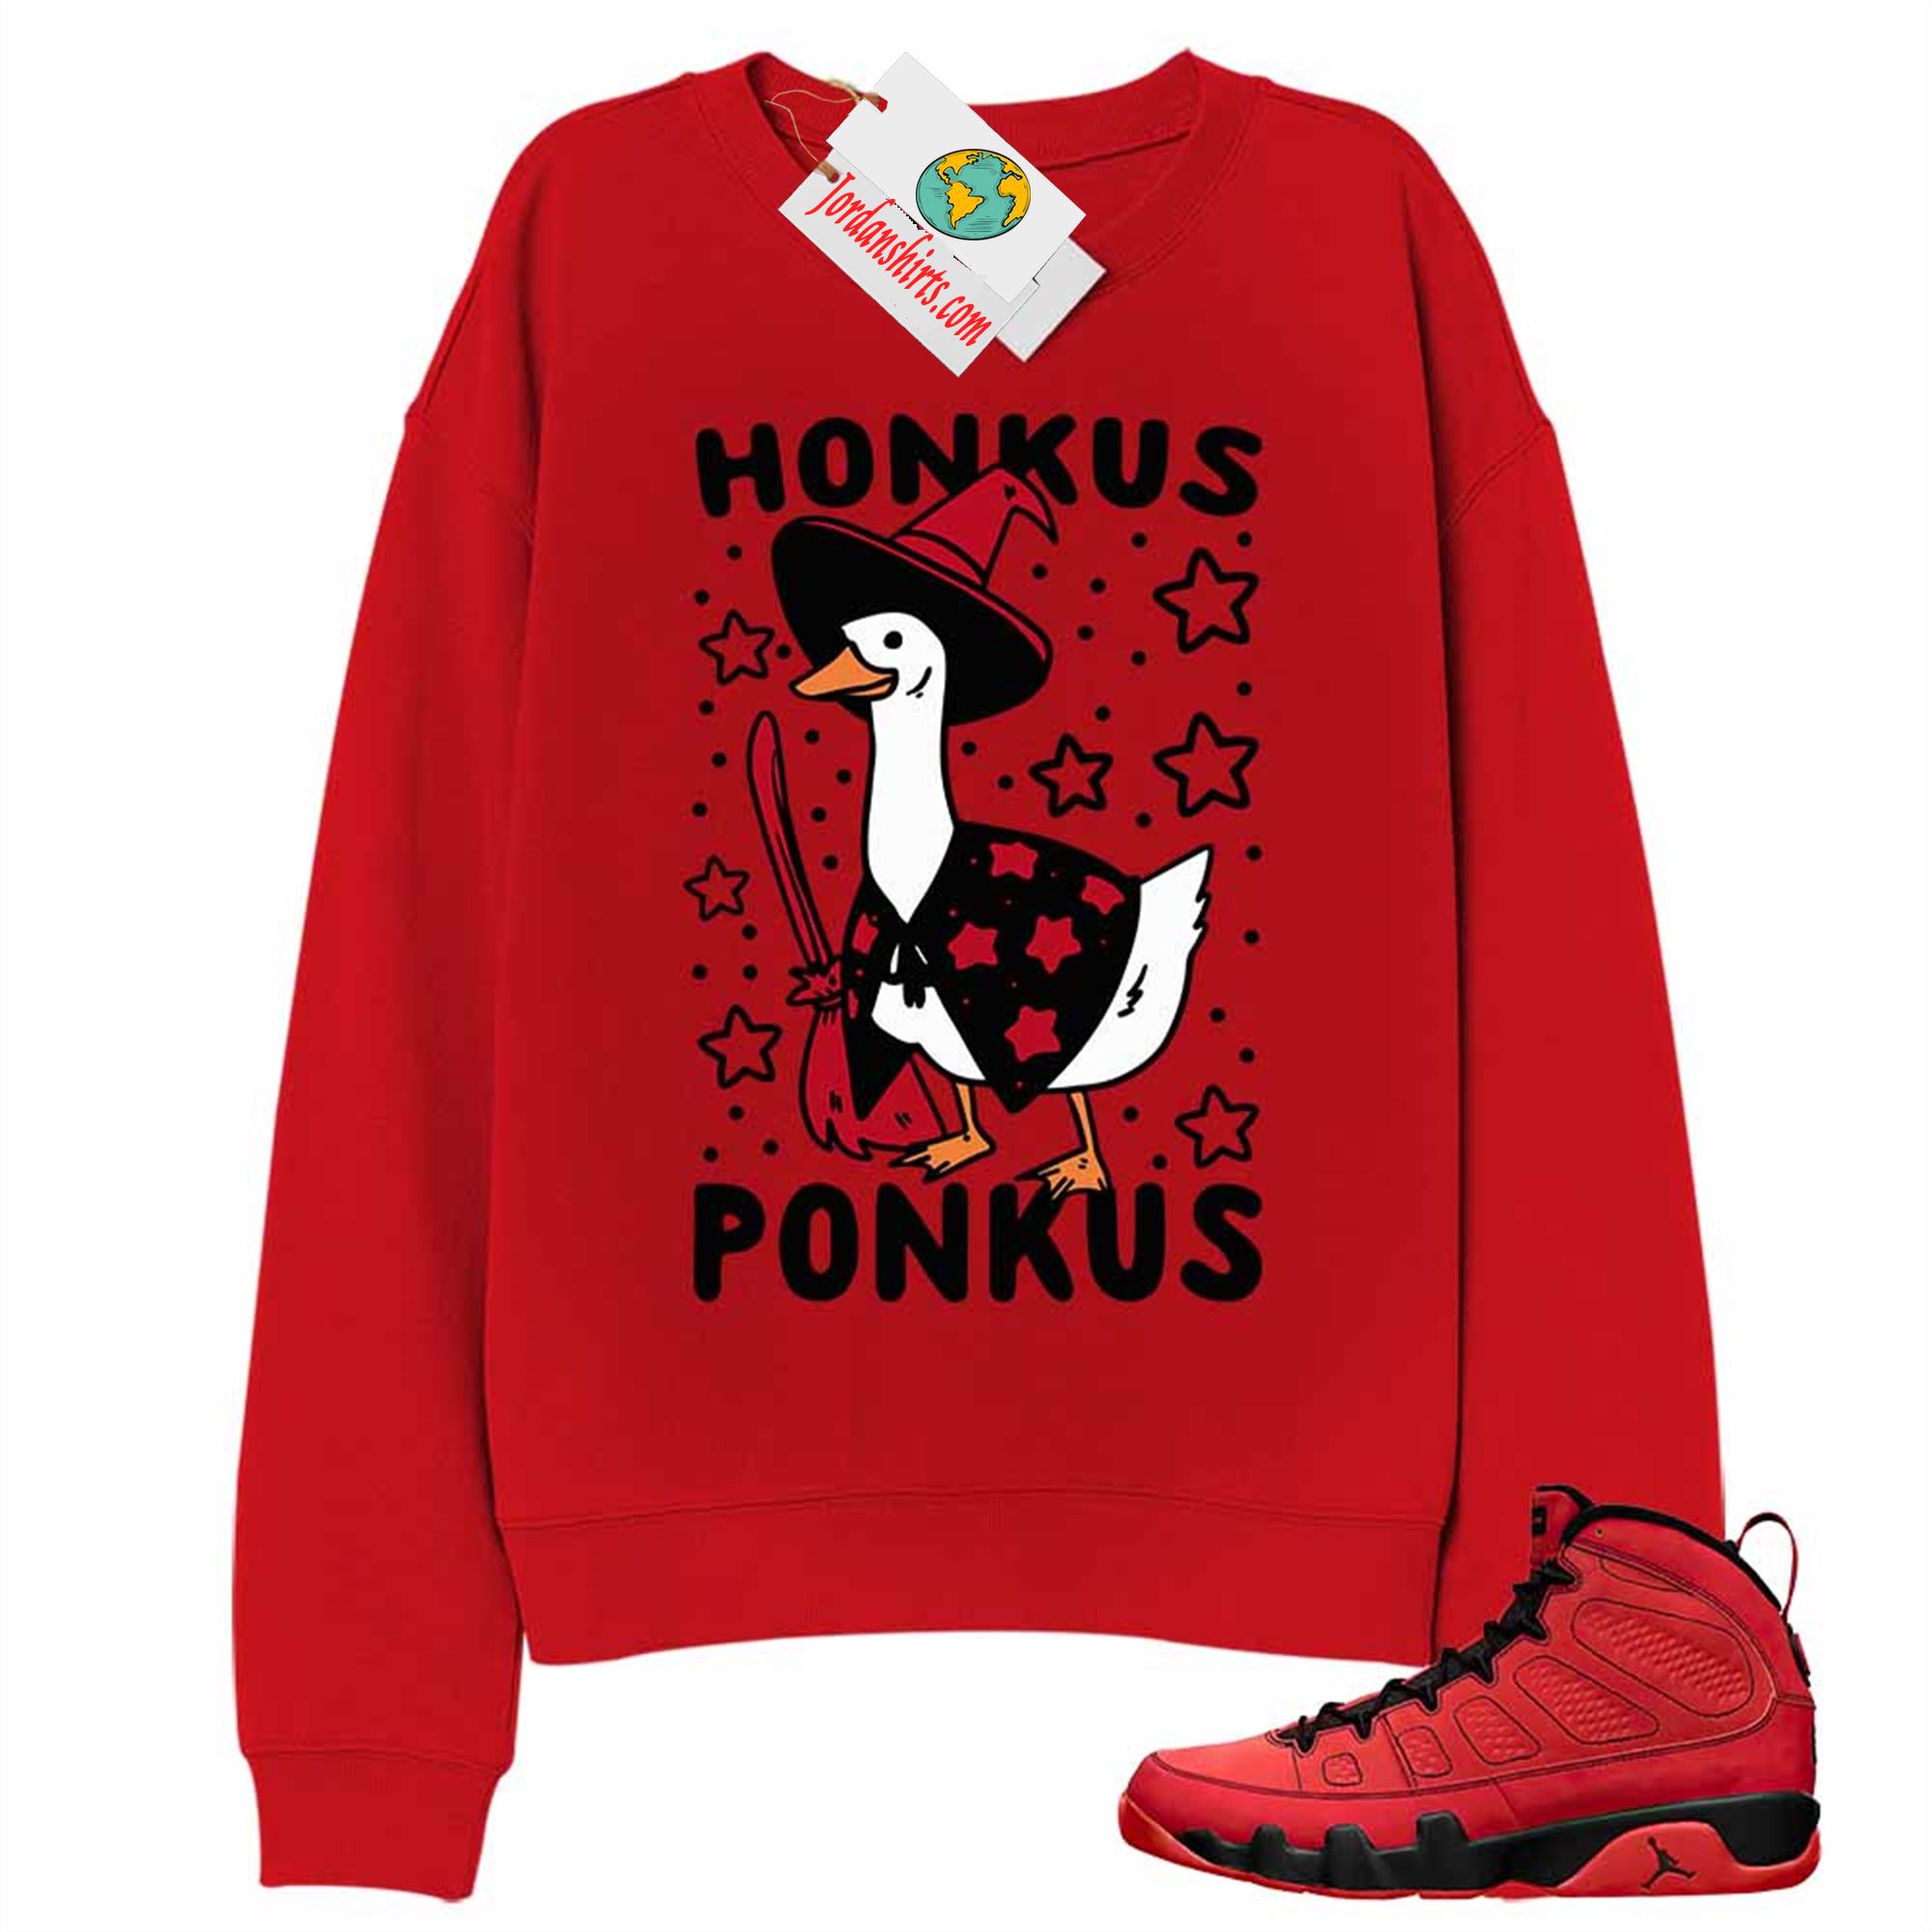 Jordan 9 Sweatshirt, Witches Duck Honkus Ponkus Red Sweatshirt Air Jordan 9 Chile Red 9s Plus Size Up To 5xl